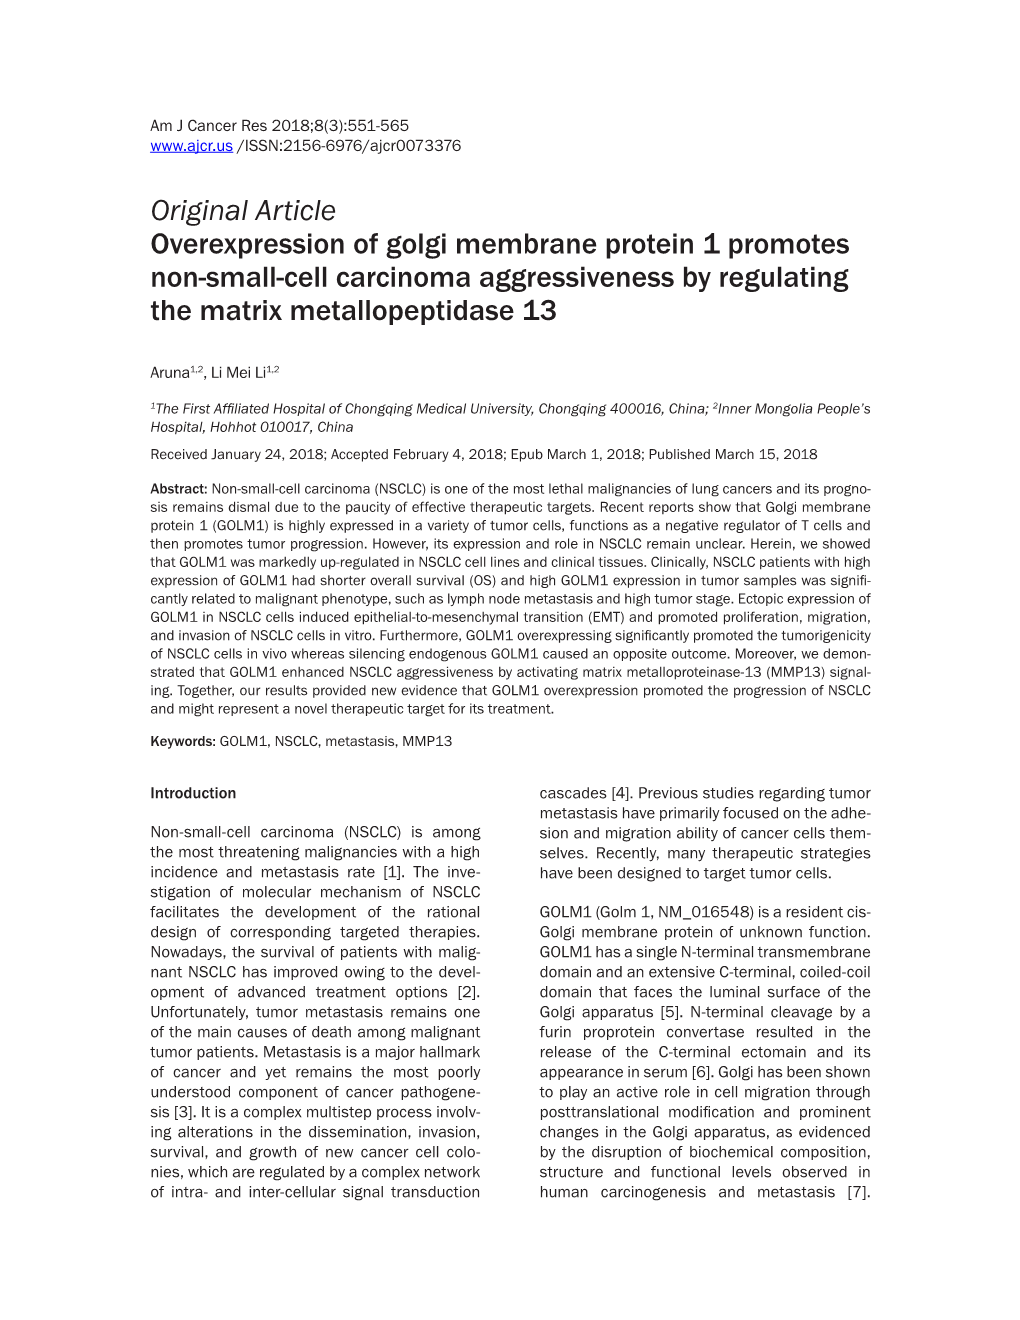 Original Article Overexpression of Golgi Membrane Protein 1 Promotes Non-Small-Cell Carcinoma Aggressiveness by Regulating the Matrix Metallopeptidase 13